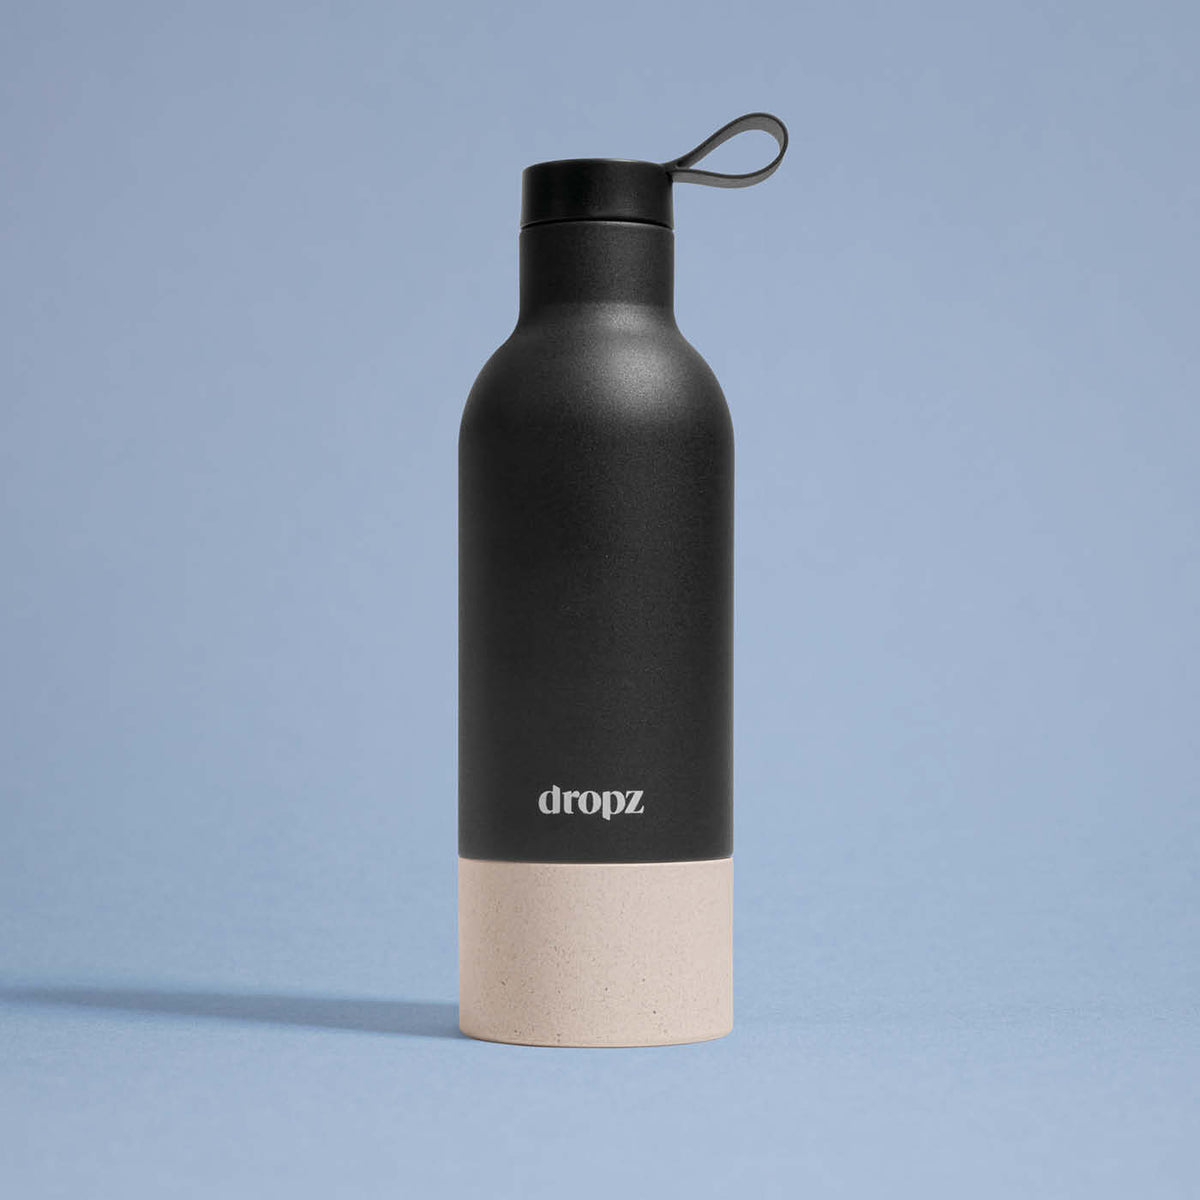 dropz Bottle black - 0.5L with storage compartment